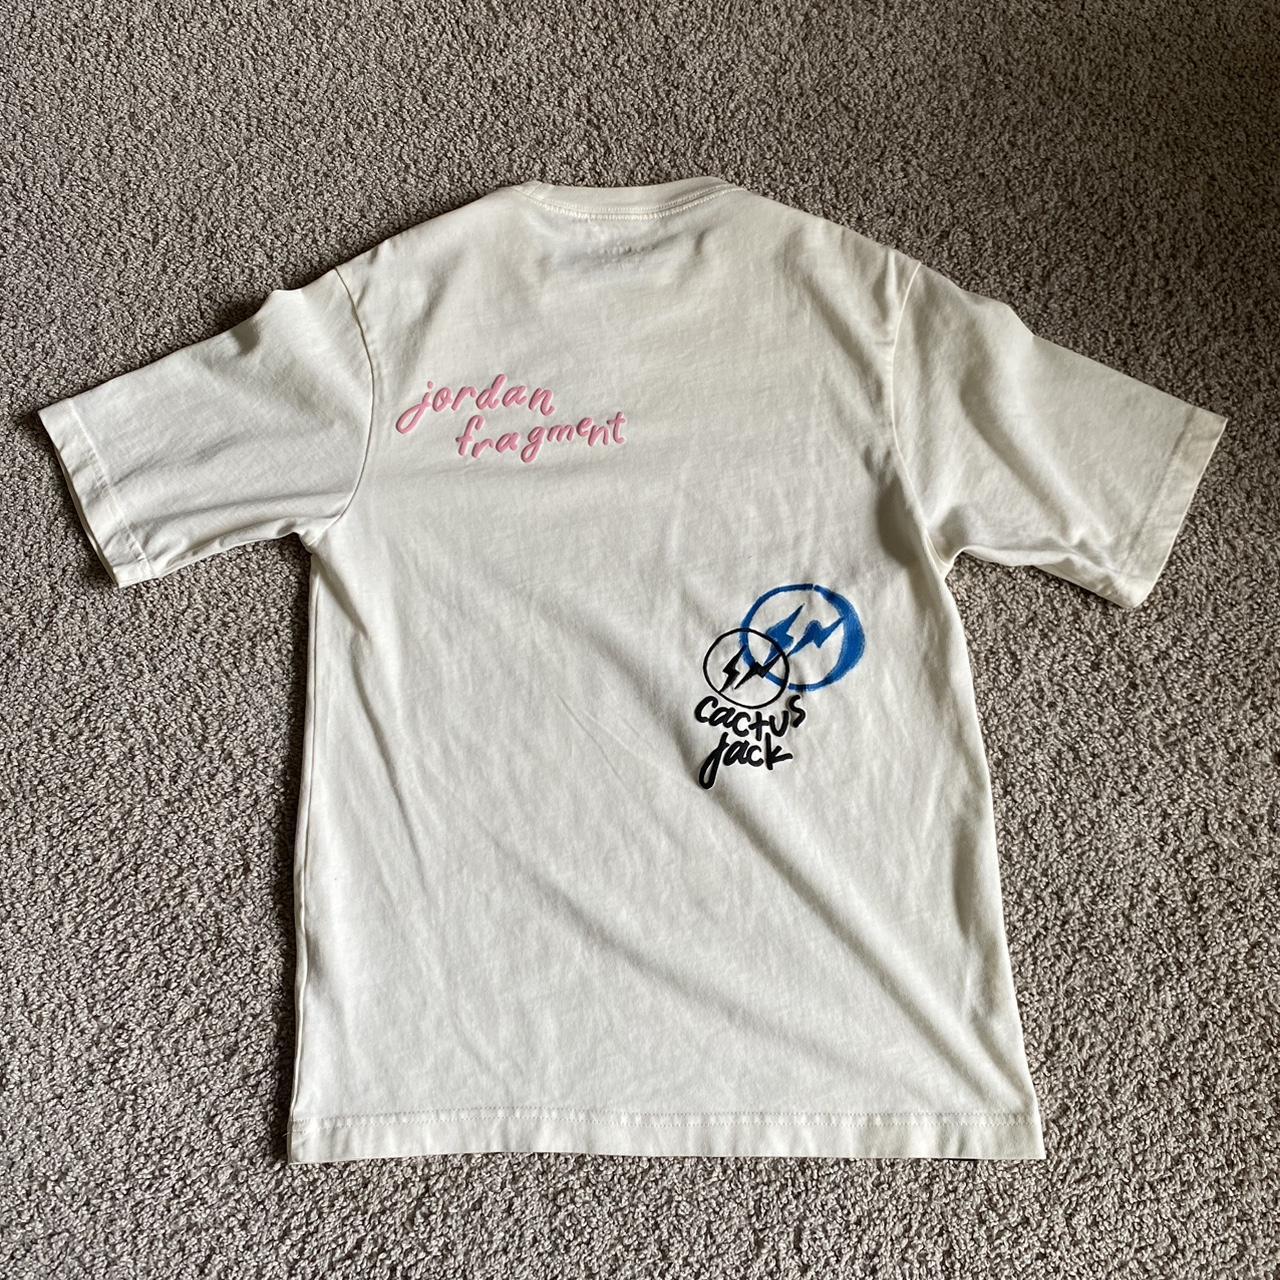 Rare Travis Scott x Jordan x Fragment T-shirt White Seen on